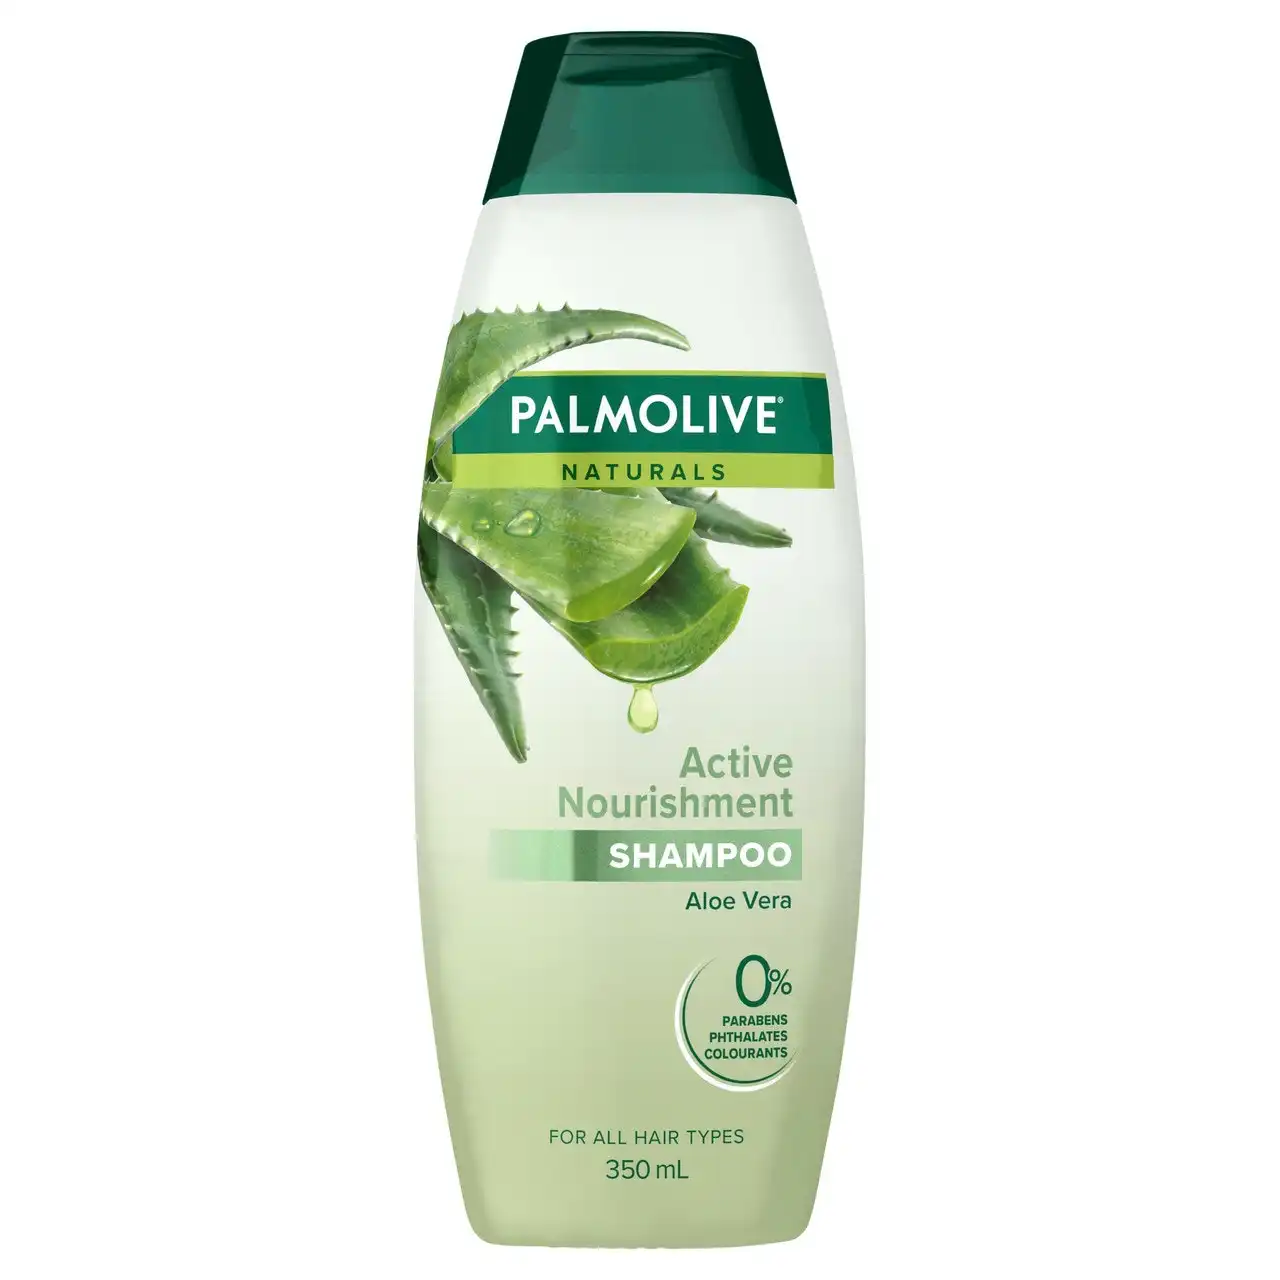 Palmolive Naturals Hair Shampoo, 350mL, Active Nourishment with Natural Aloe Vera Extract